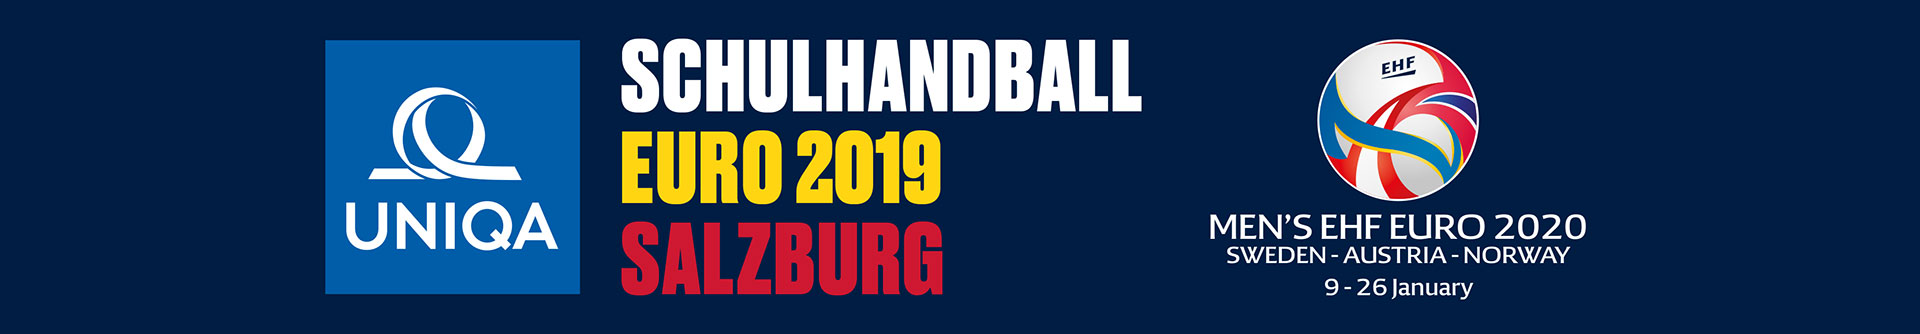 Schulhandball Euro 2019 Salzburg